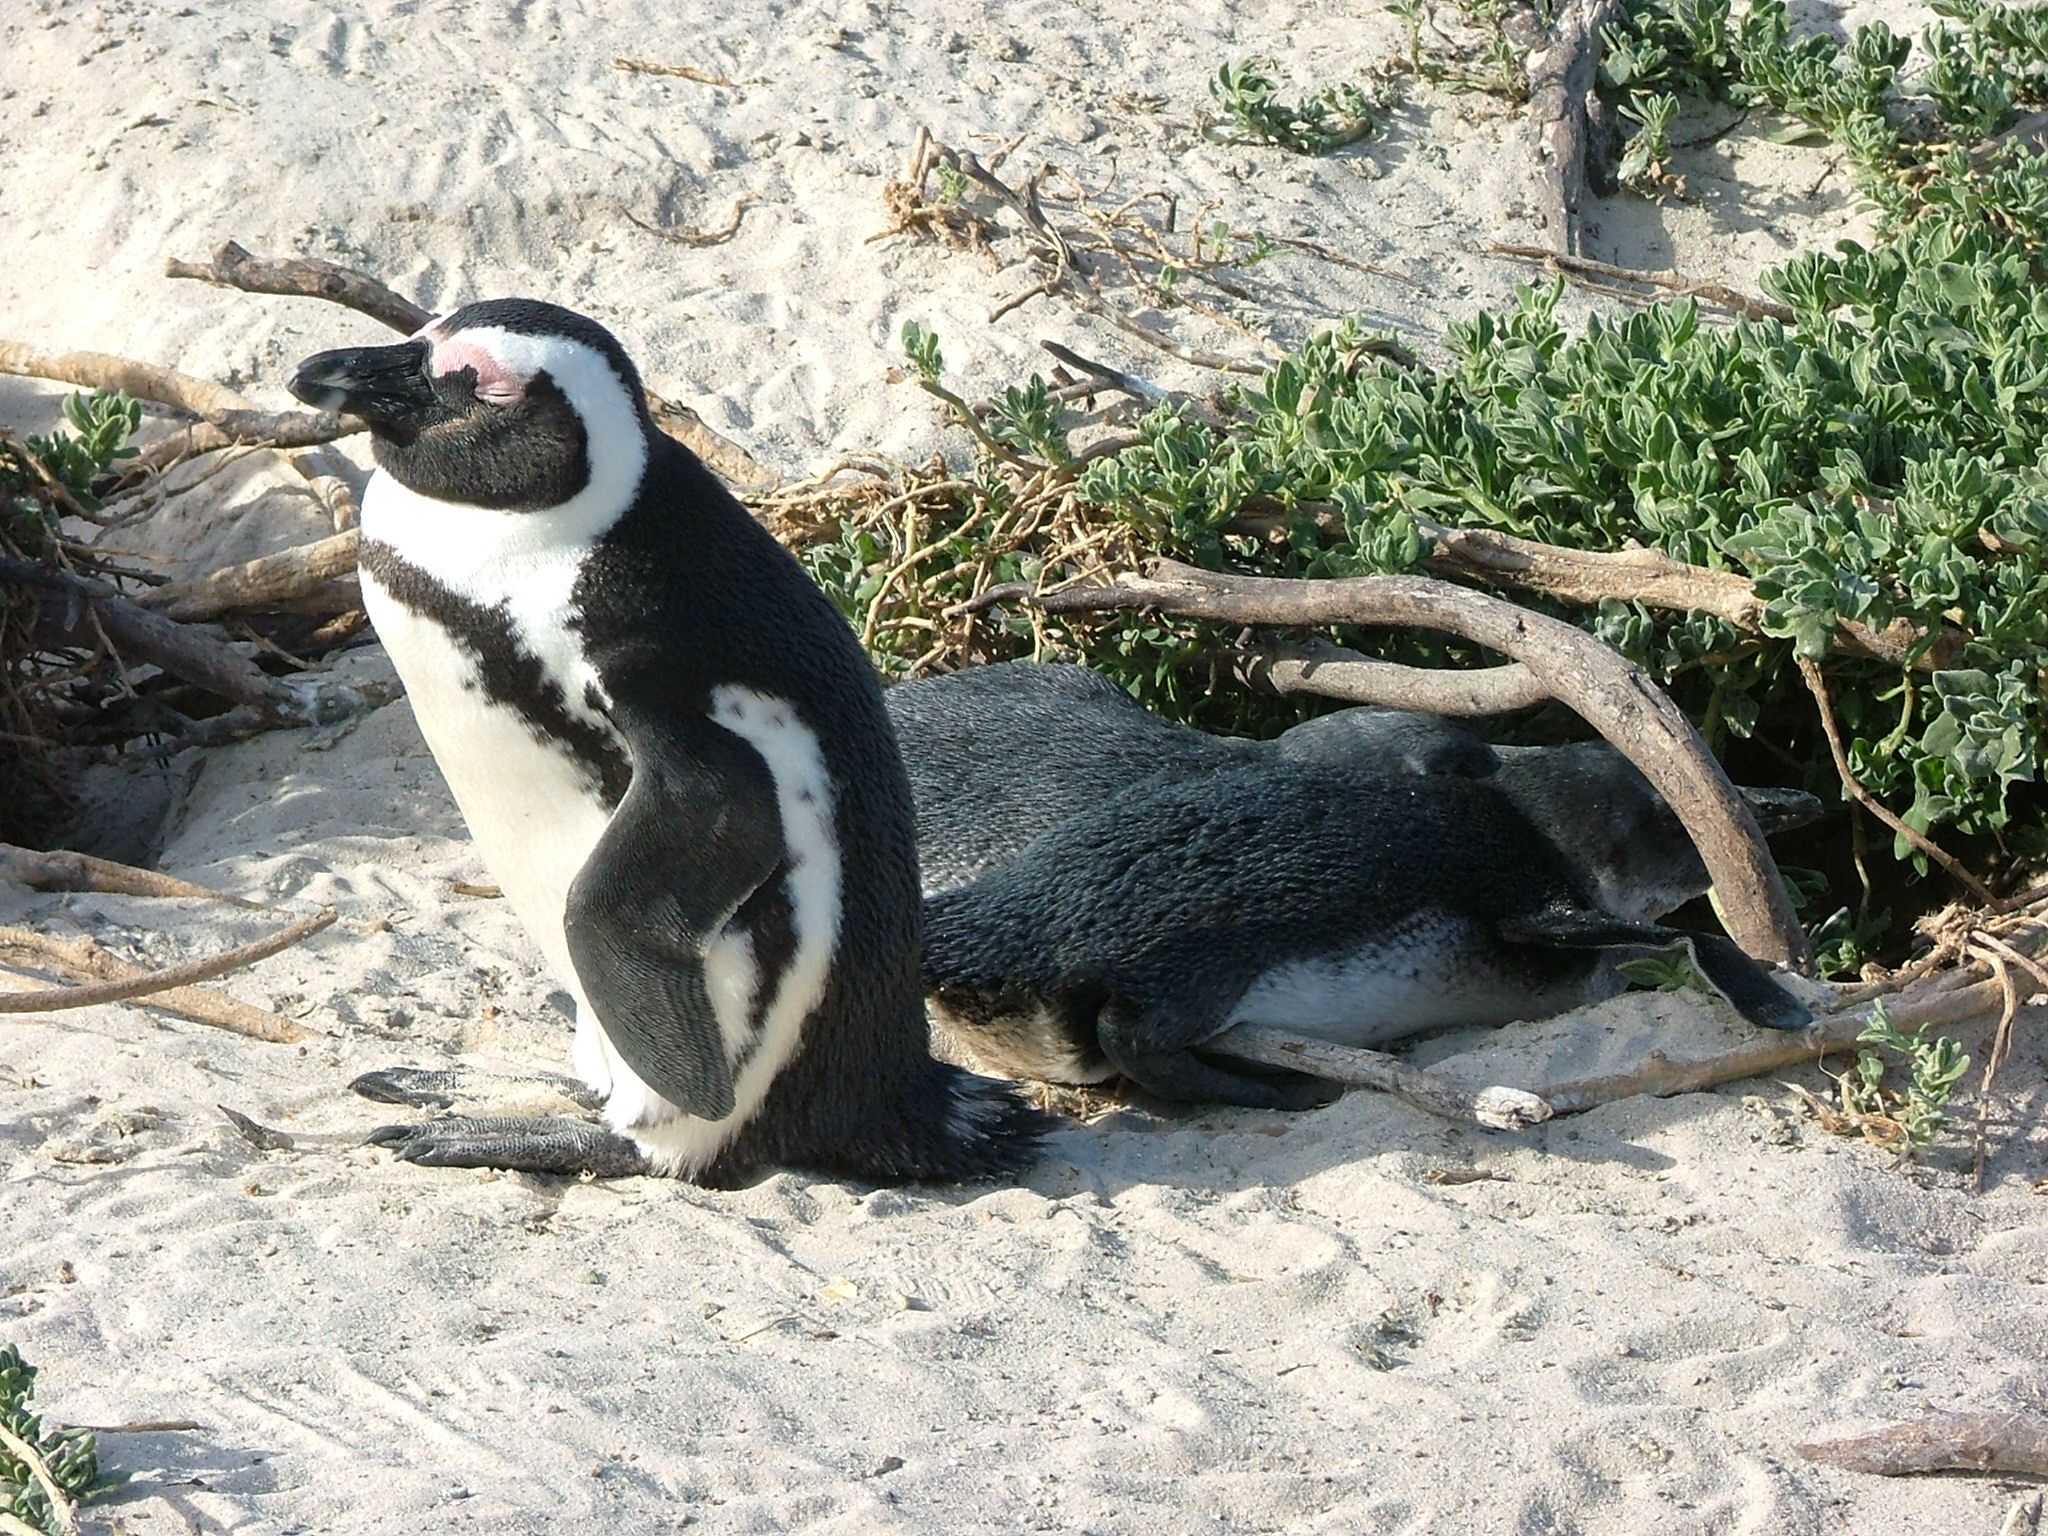 Penguins in Africa